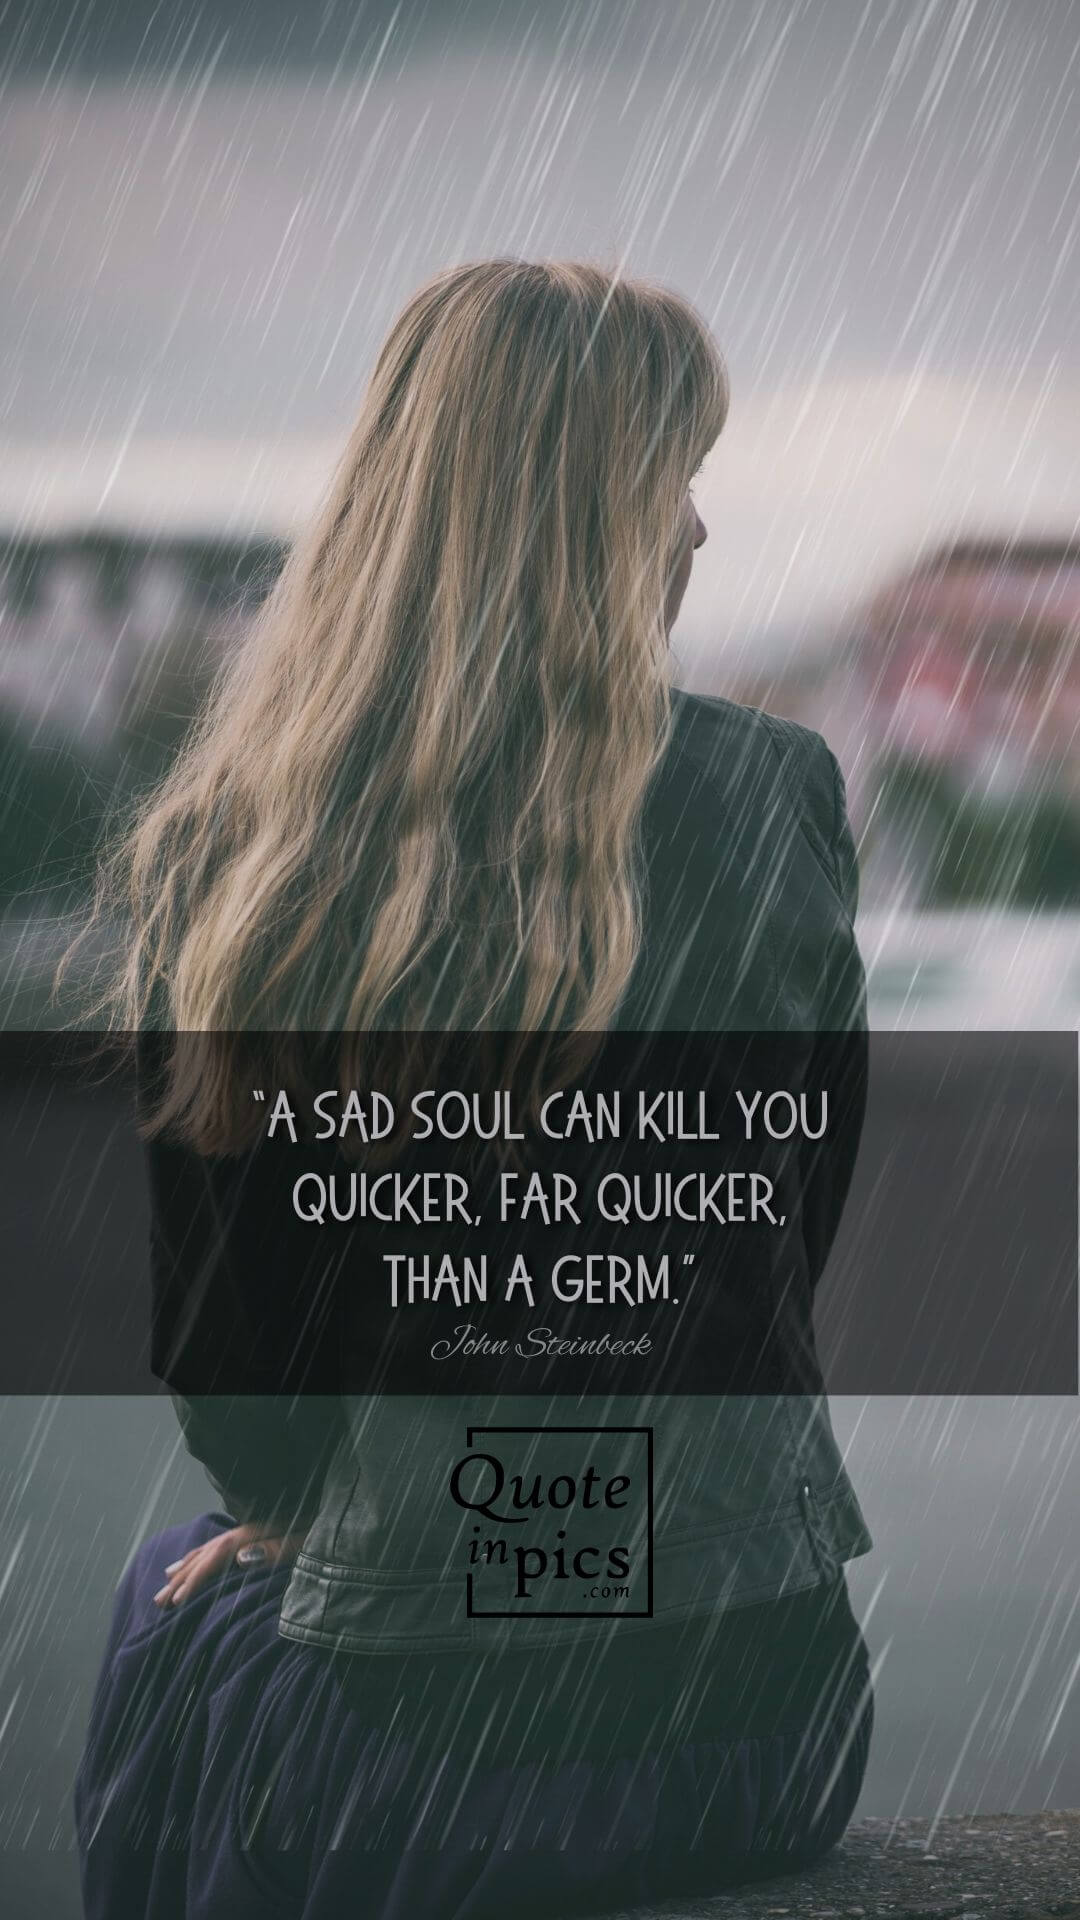 “A sad soul can kill you quicker, far quicker, than a germ.” 